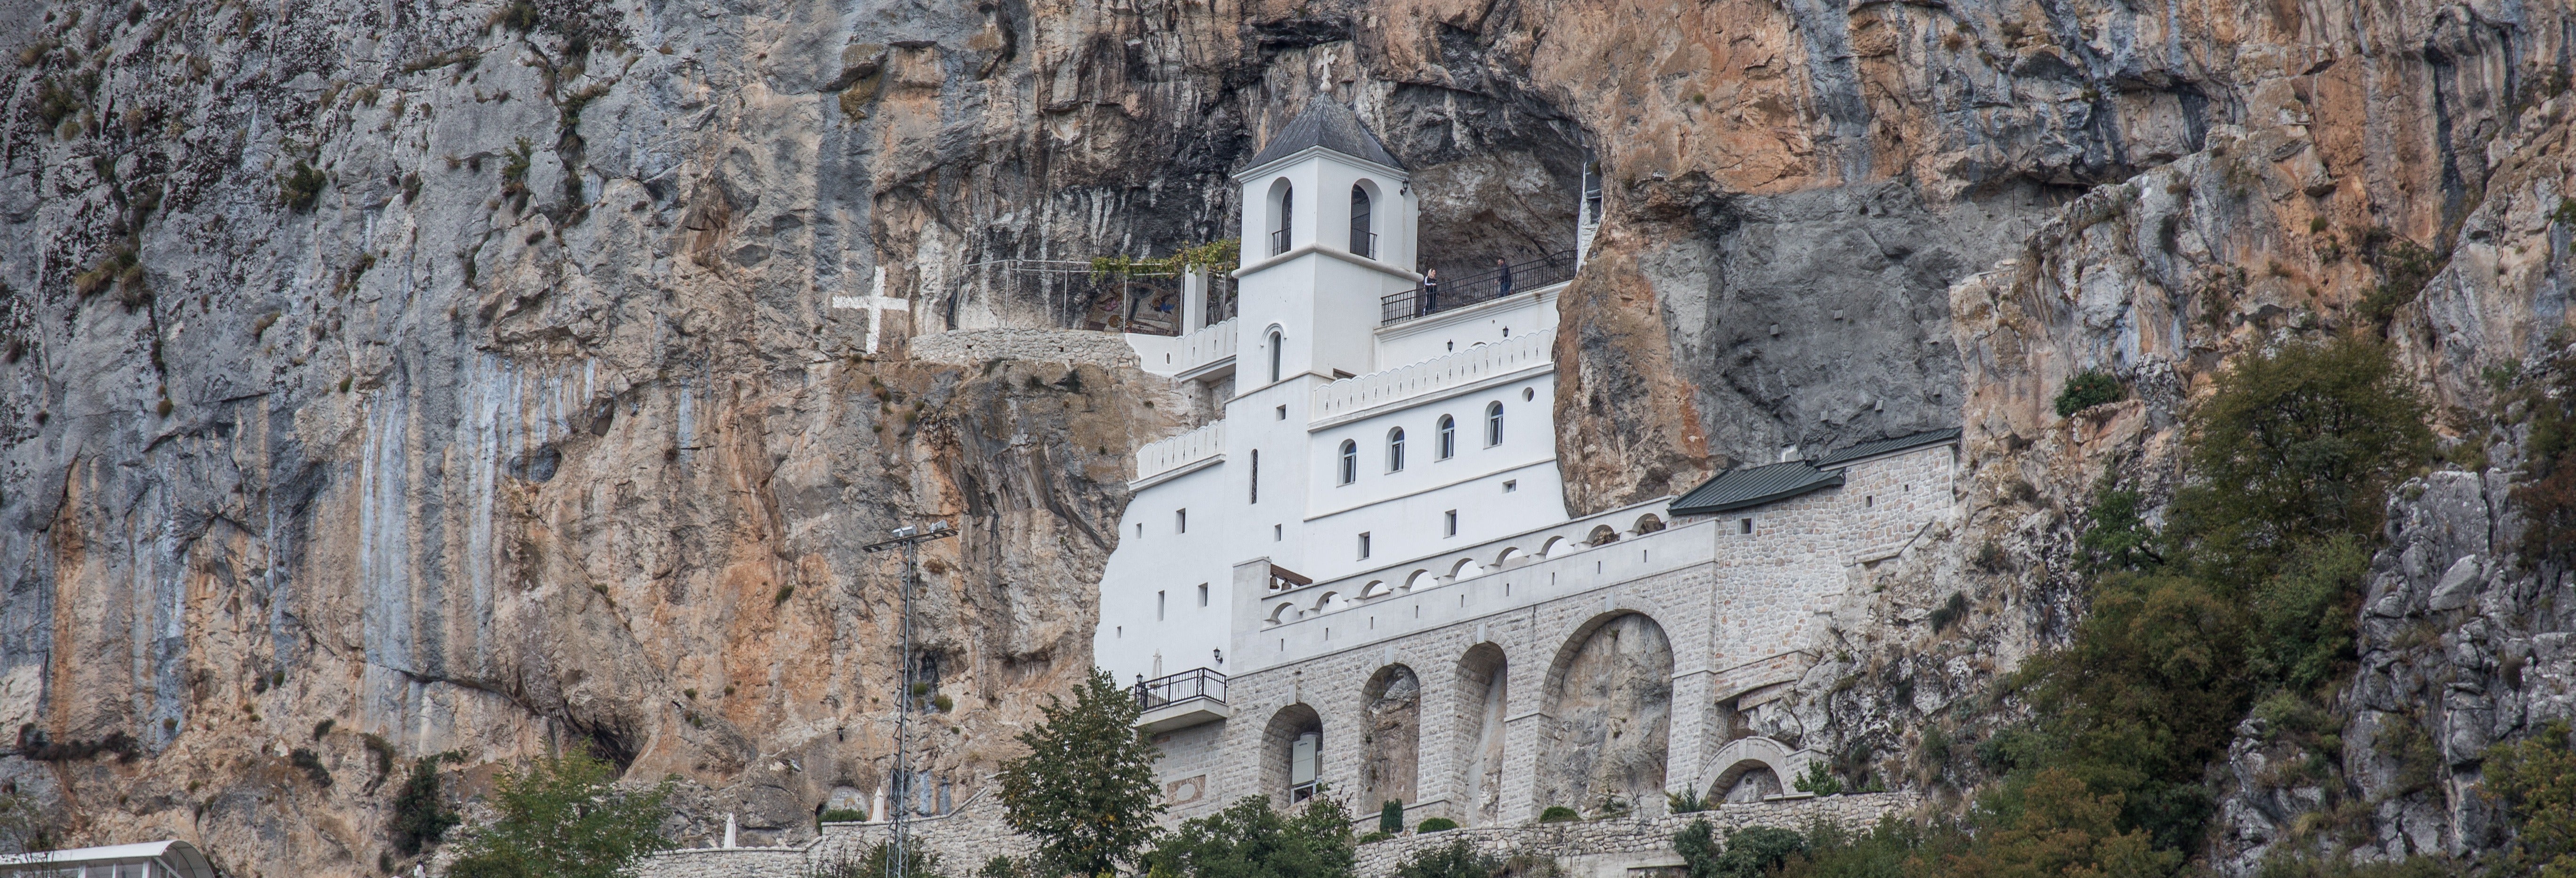 Ostrog Monastery Tour from Podgorica - Book at Civitatis.com